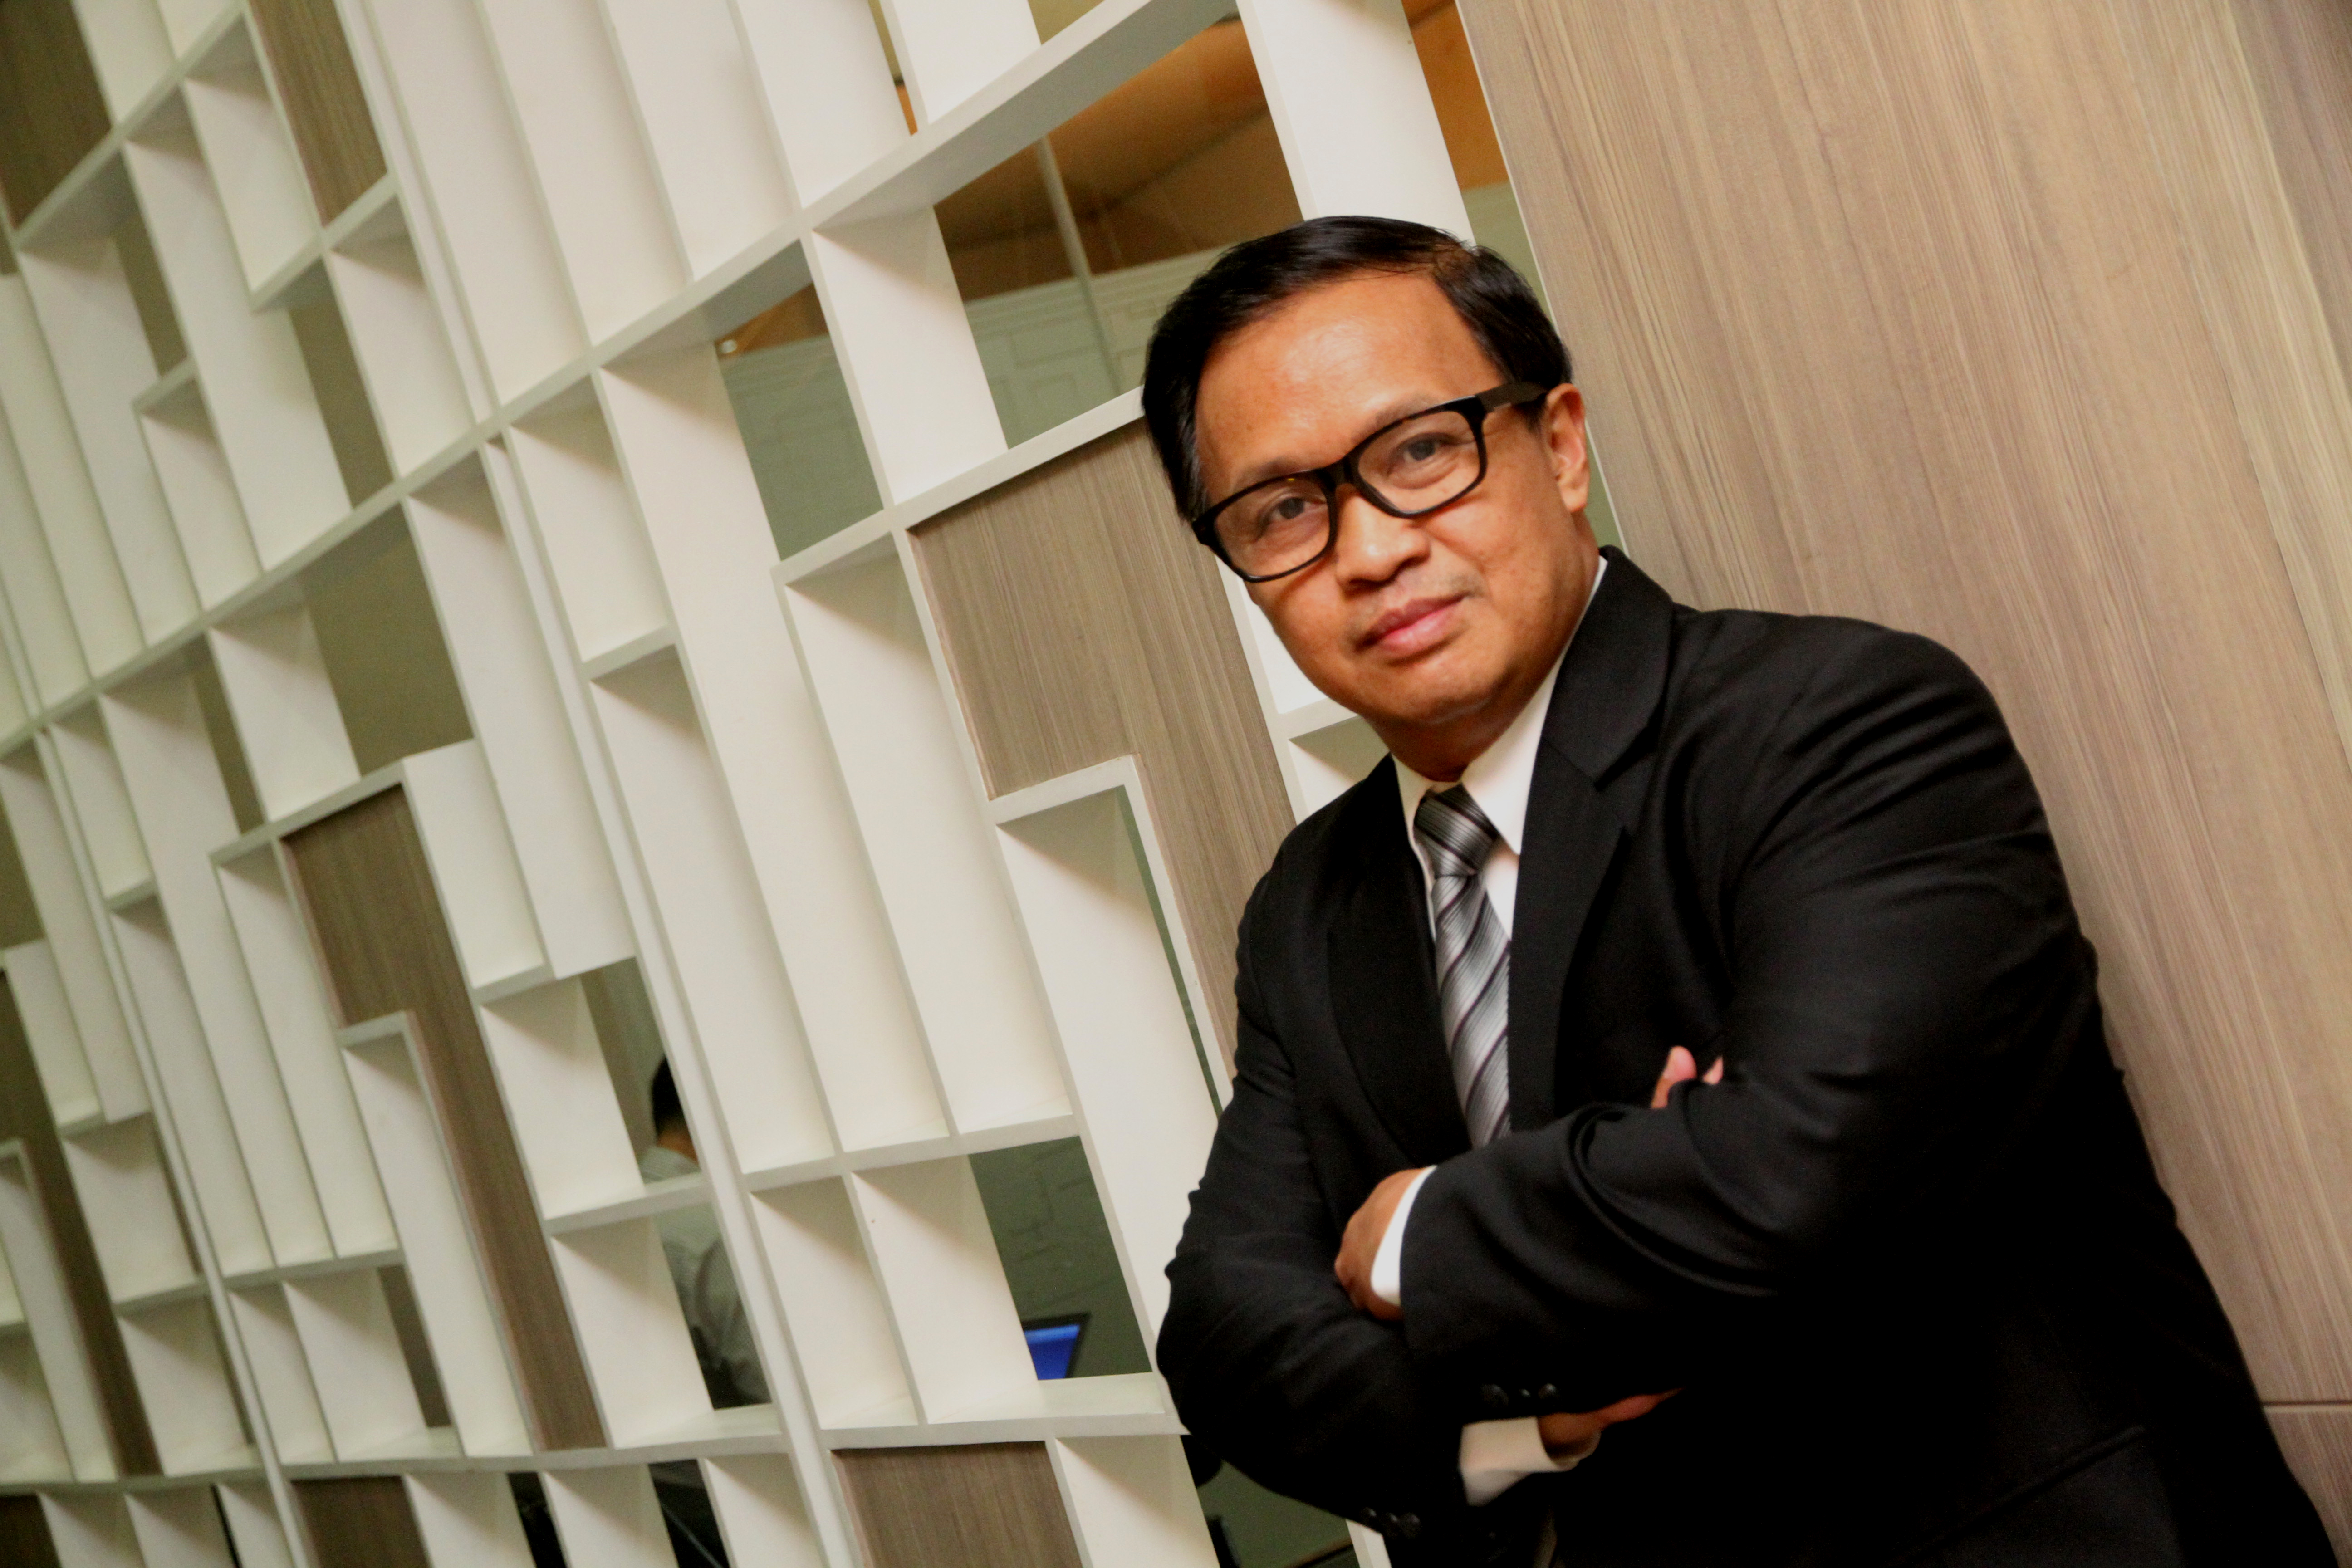 Pambudi Sunarsihanto, <span>HR Director, Bluebird Group, Indonesia</span>